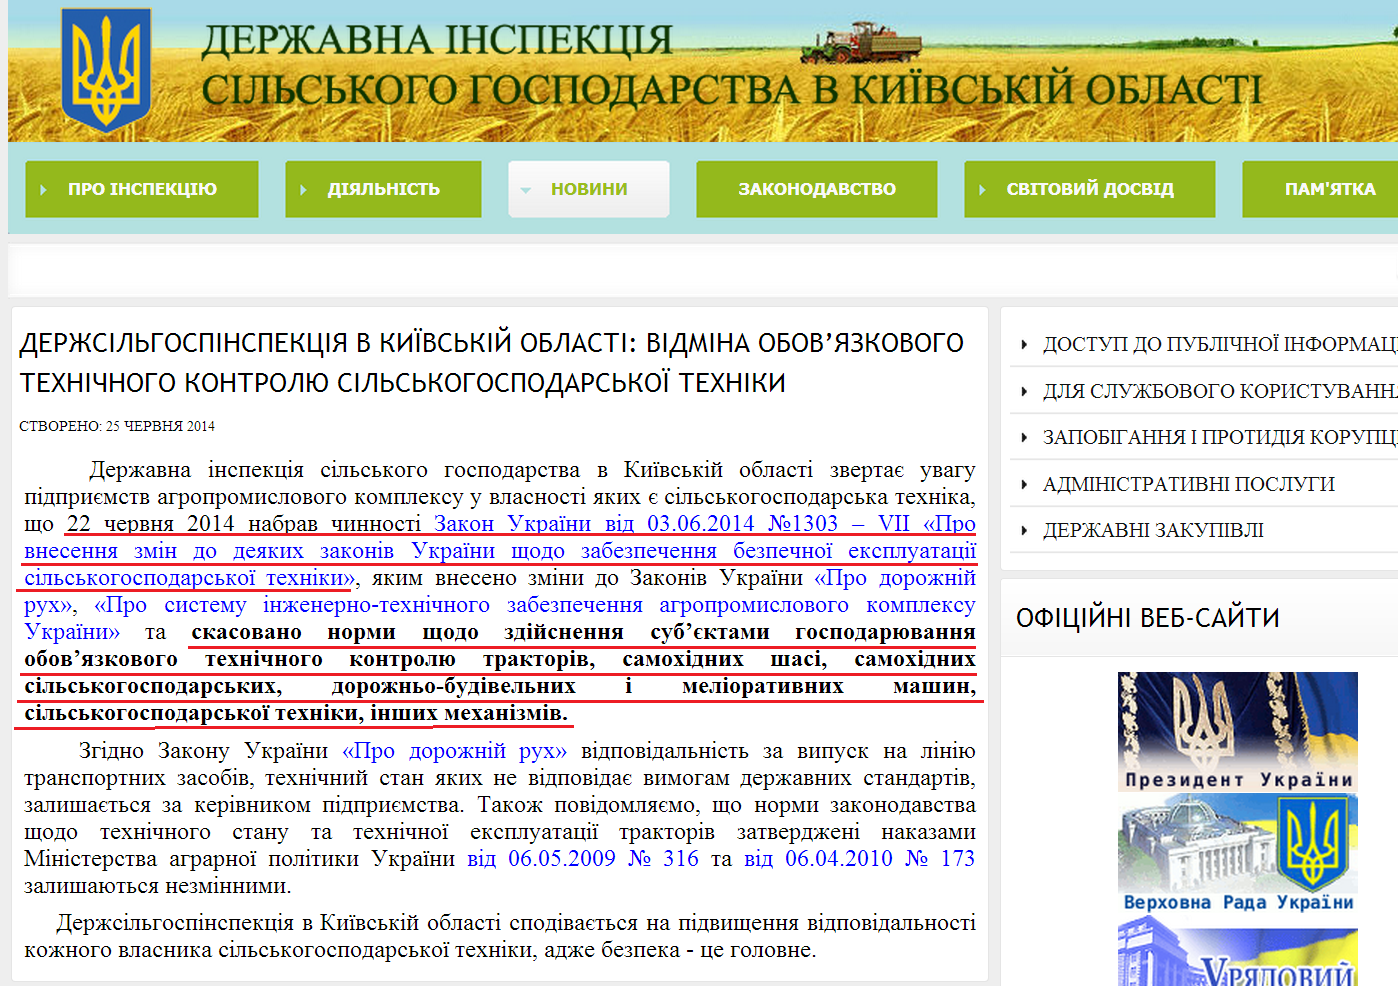 http://disguko.gov.ua/news-m/news/245-teh-kontrol-sg-tehn-vidmina